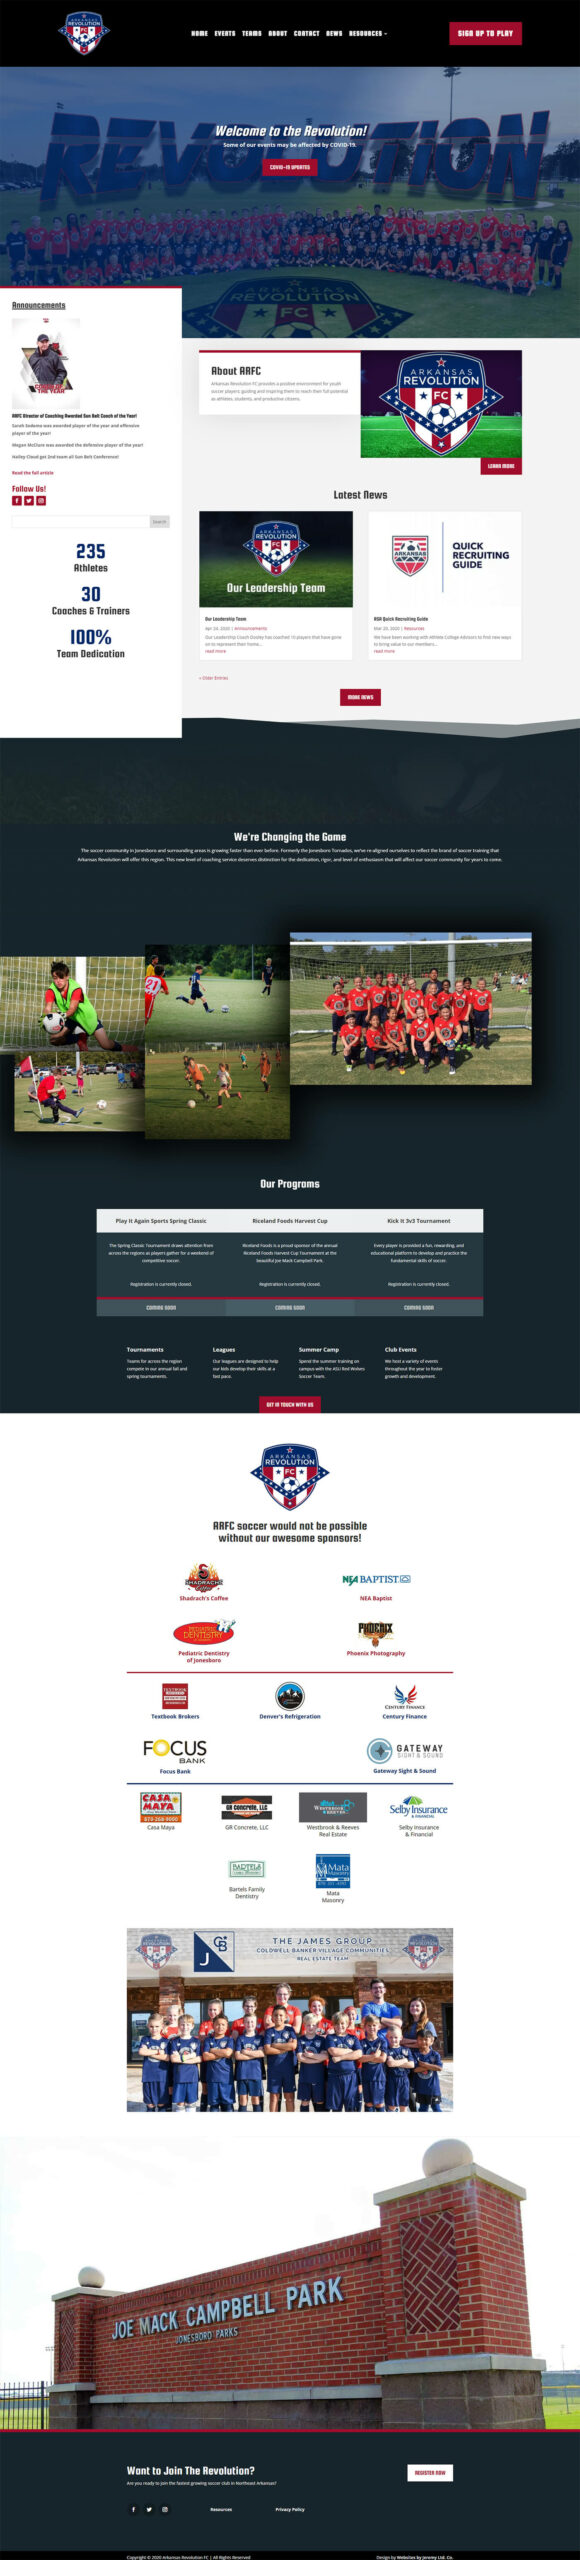 Soccer team website design